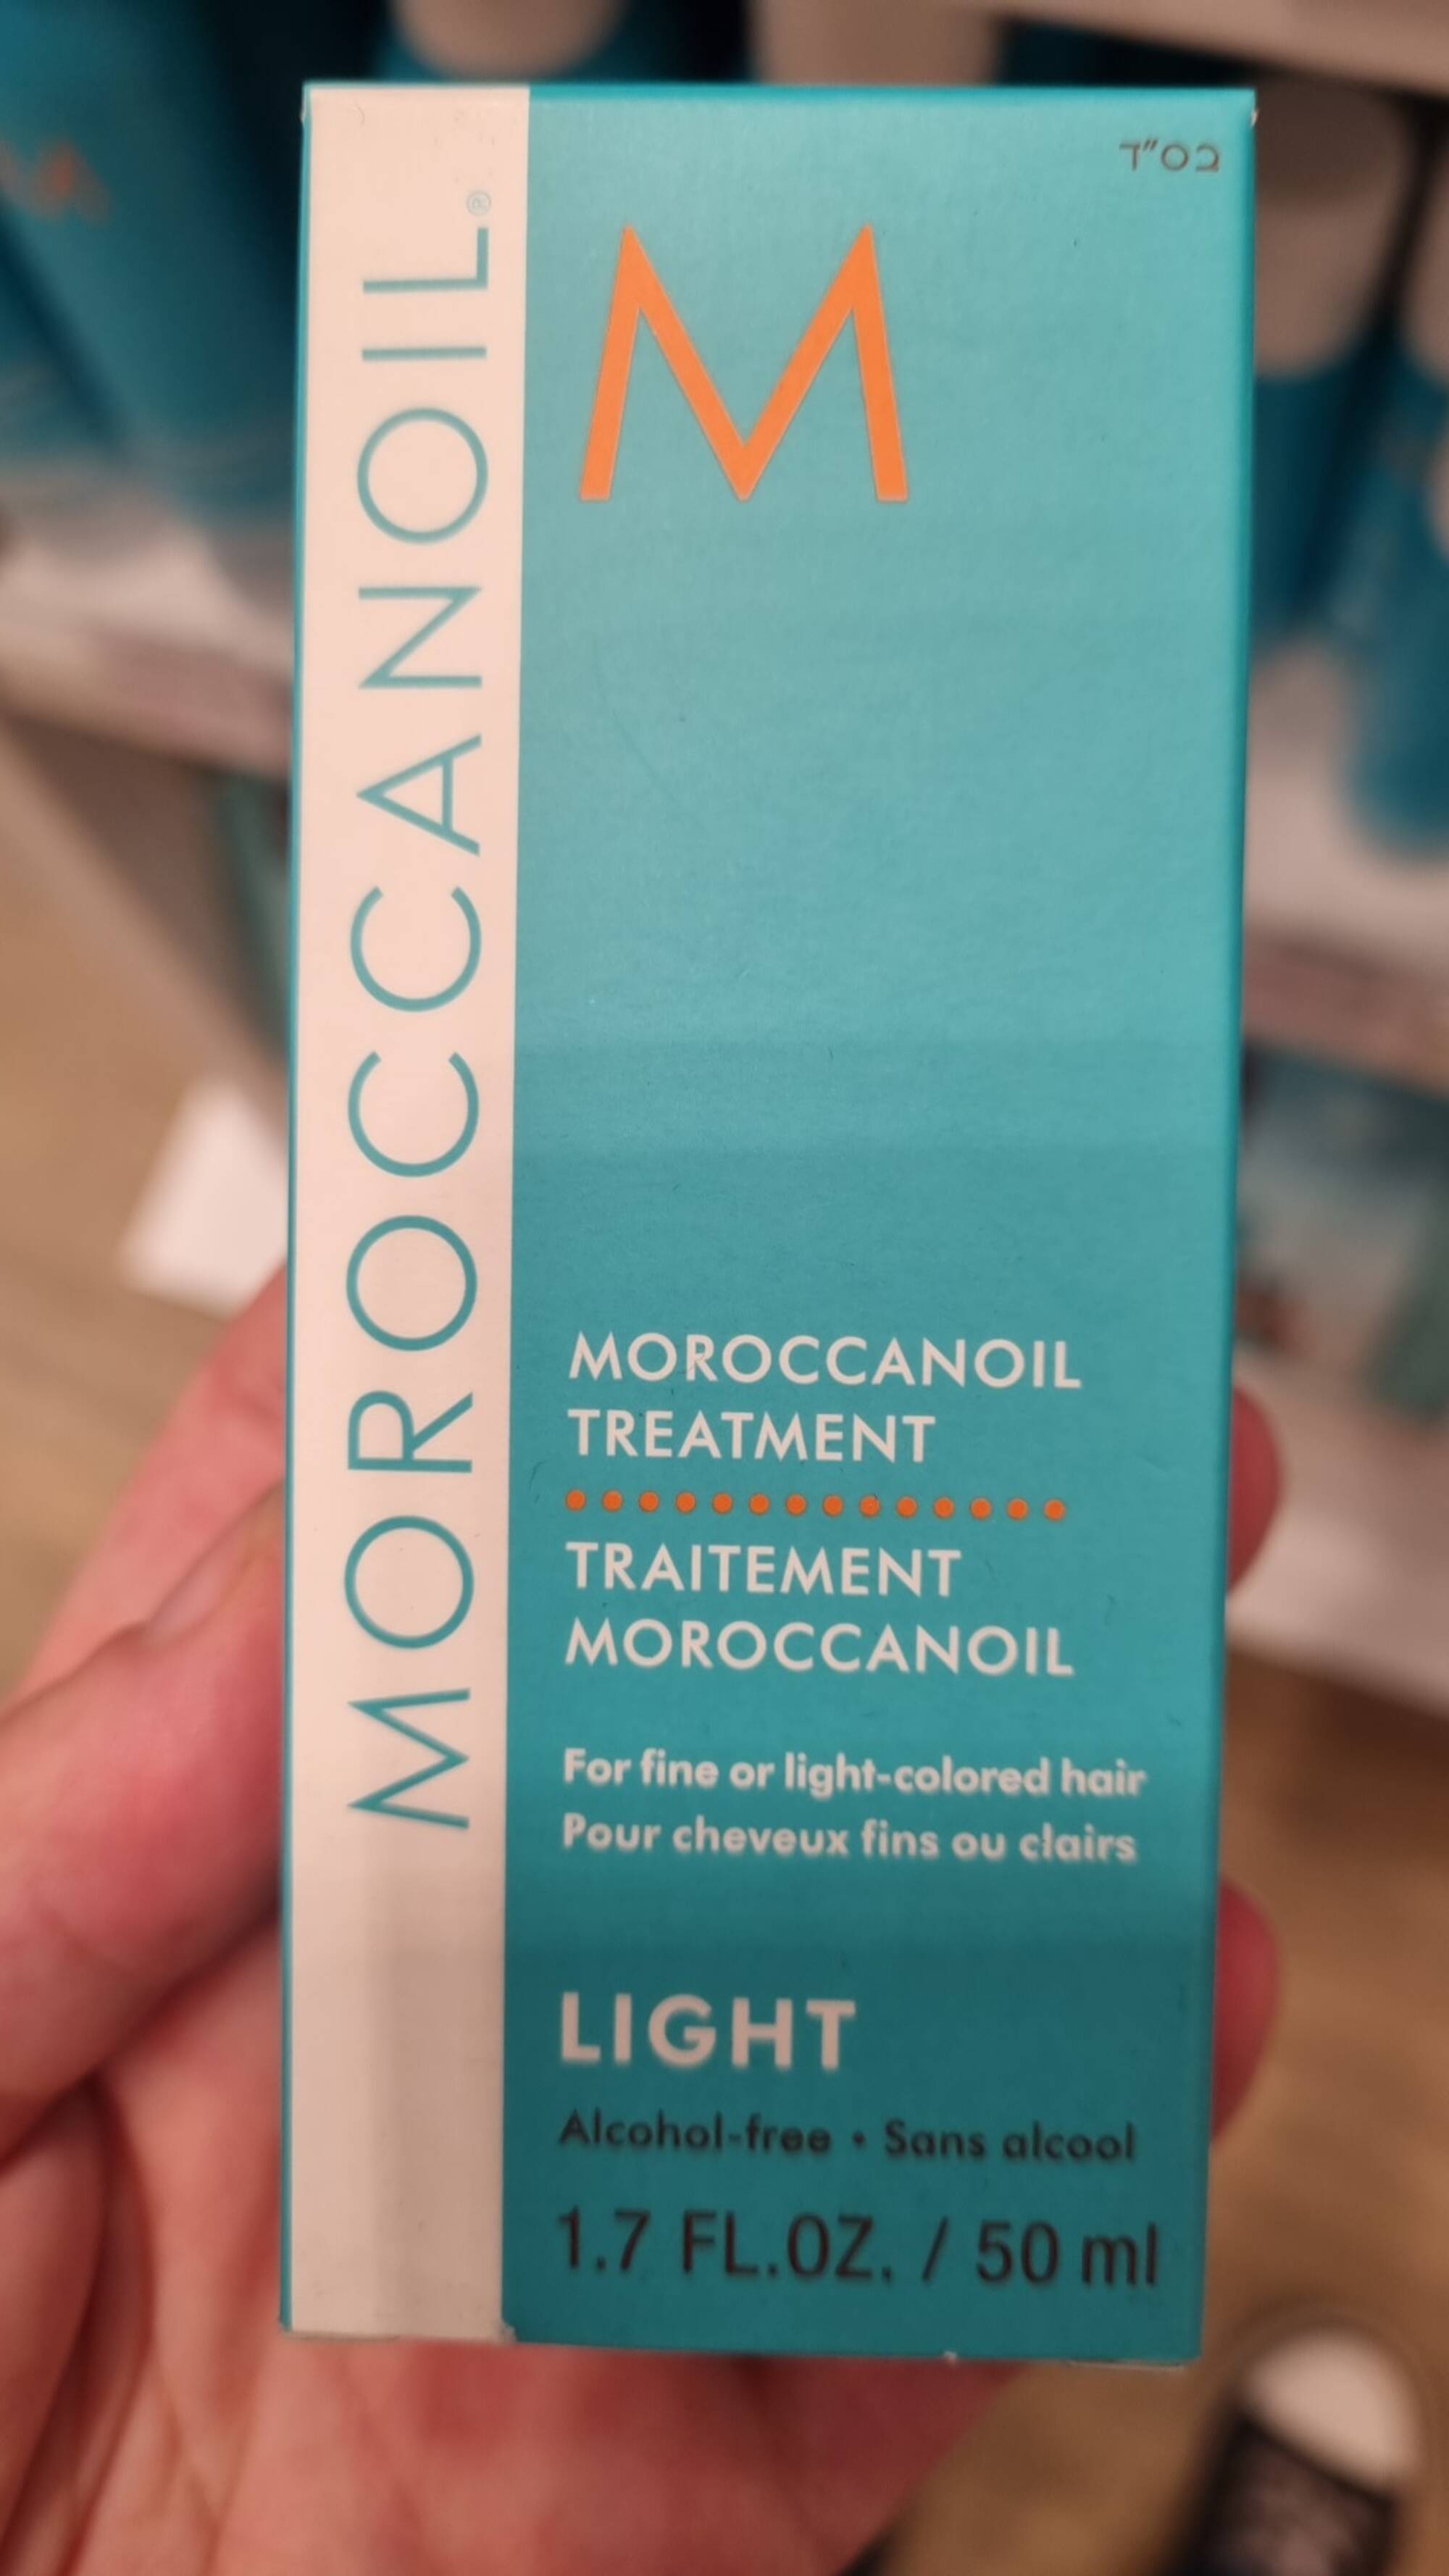 MOROCCANOIL - Traitement moroccanoil light